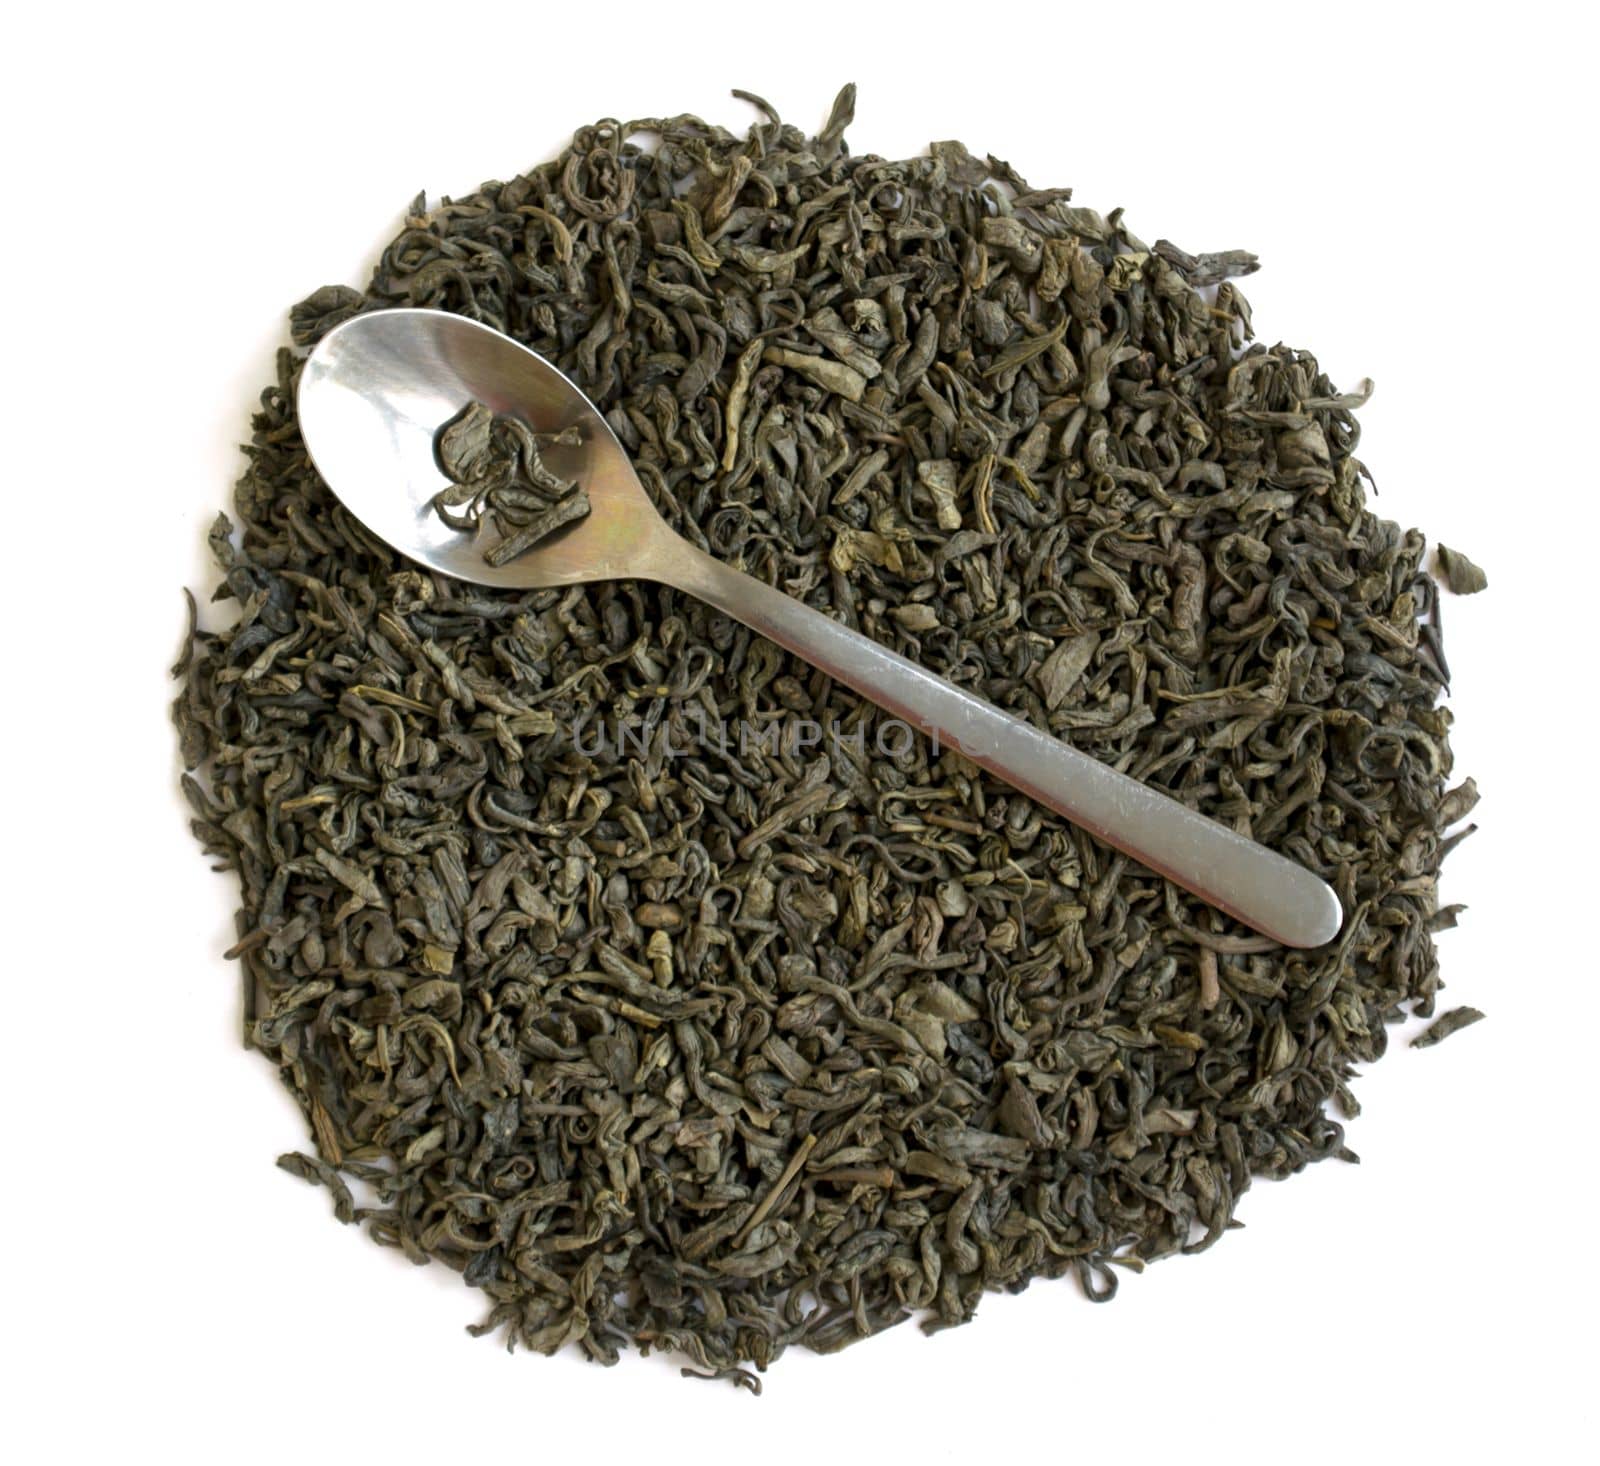 Dried green leaf tea and a spoon  by Yuka777